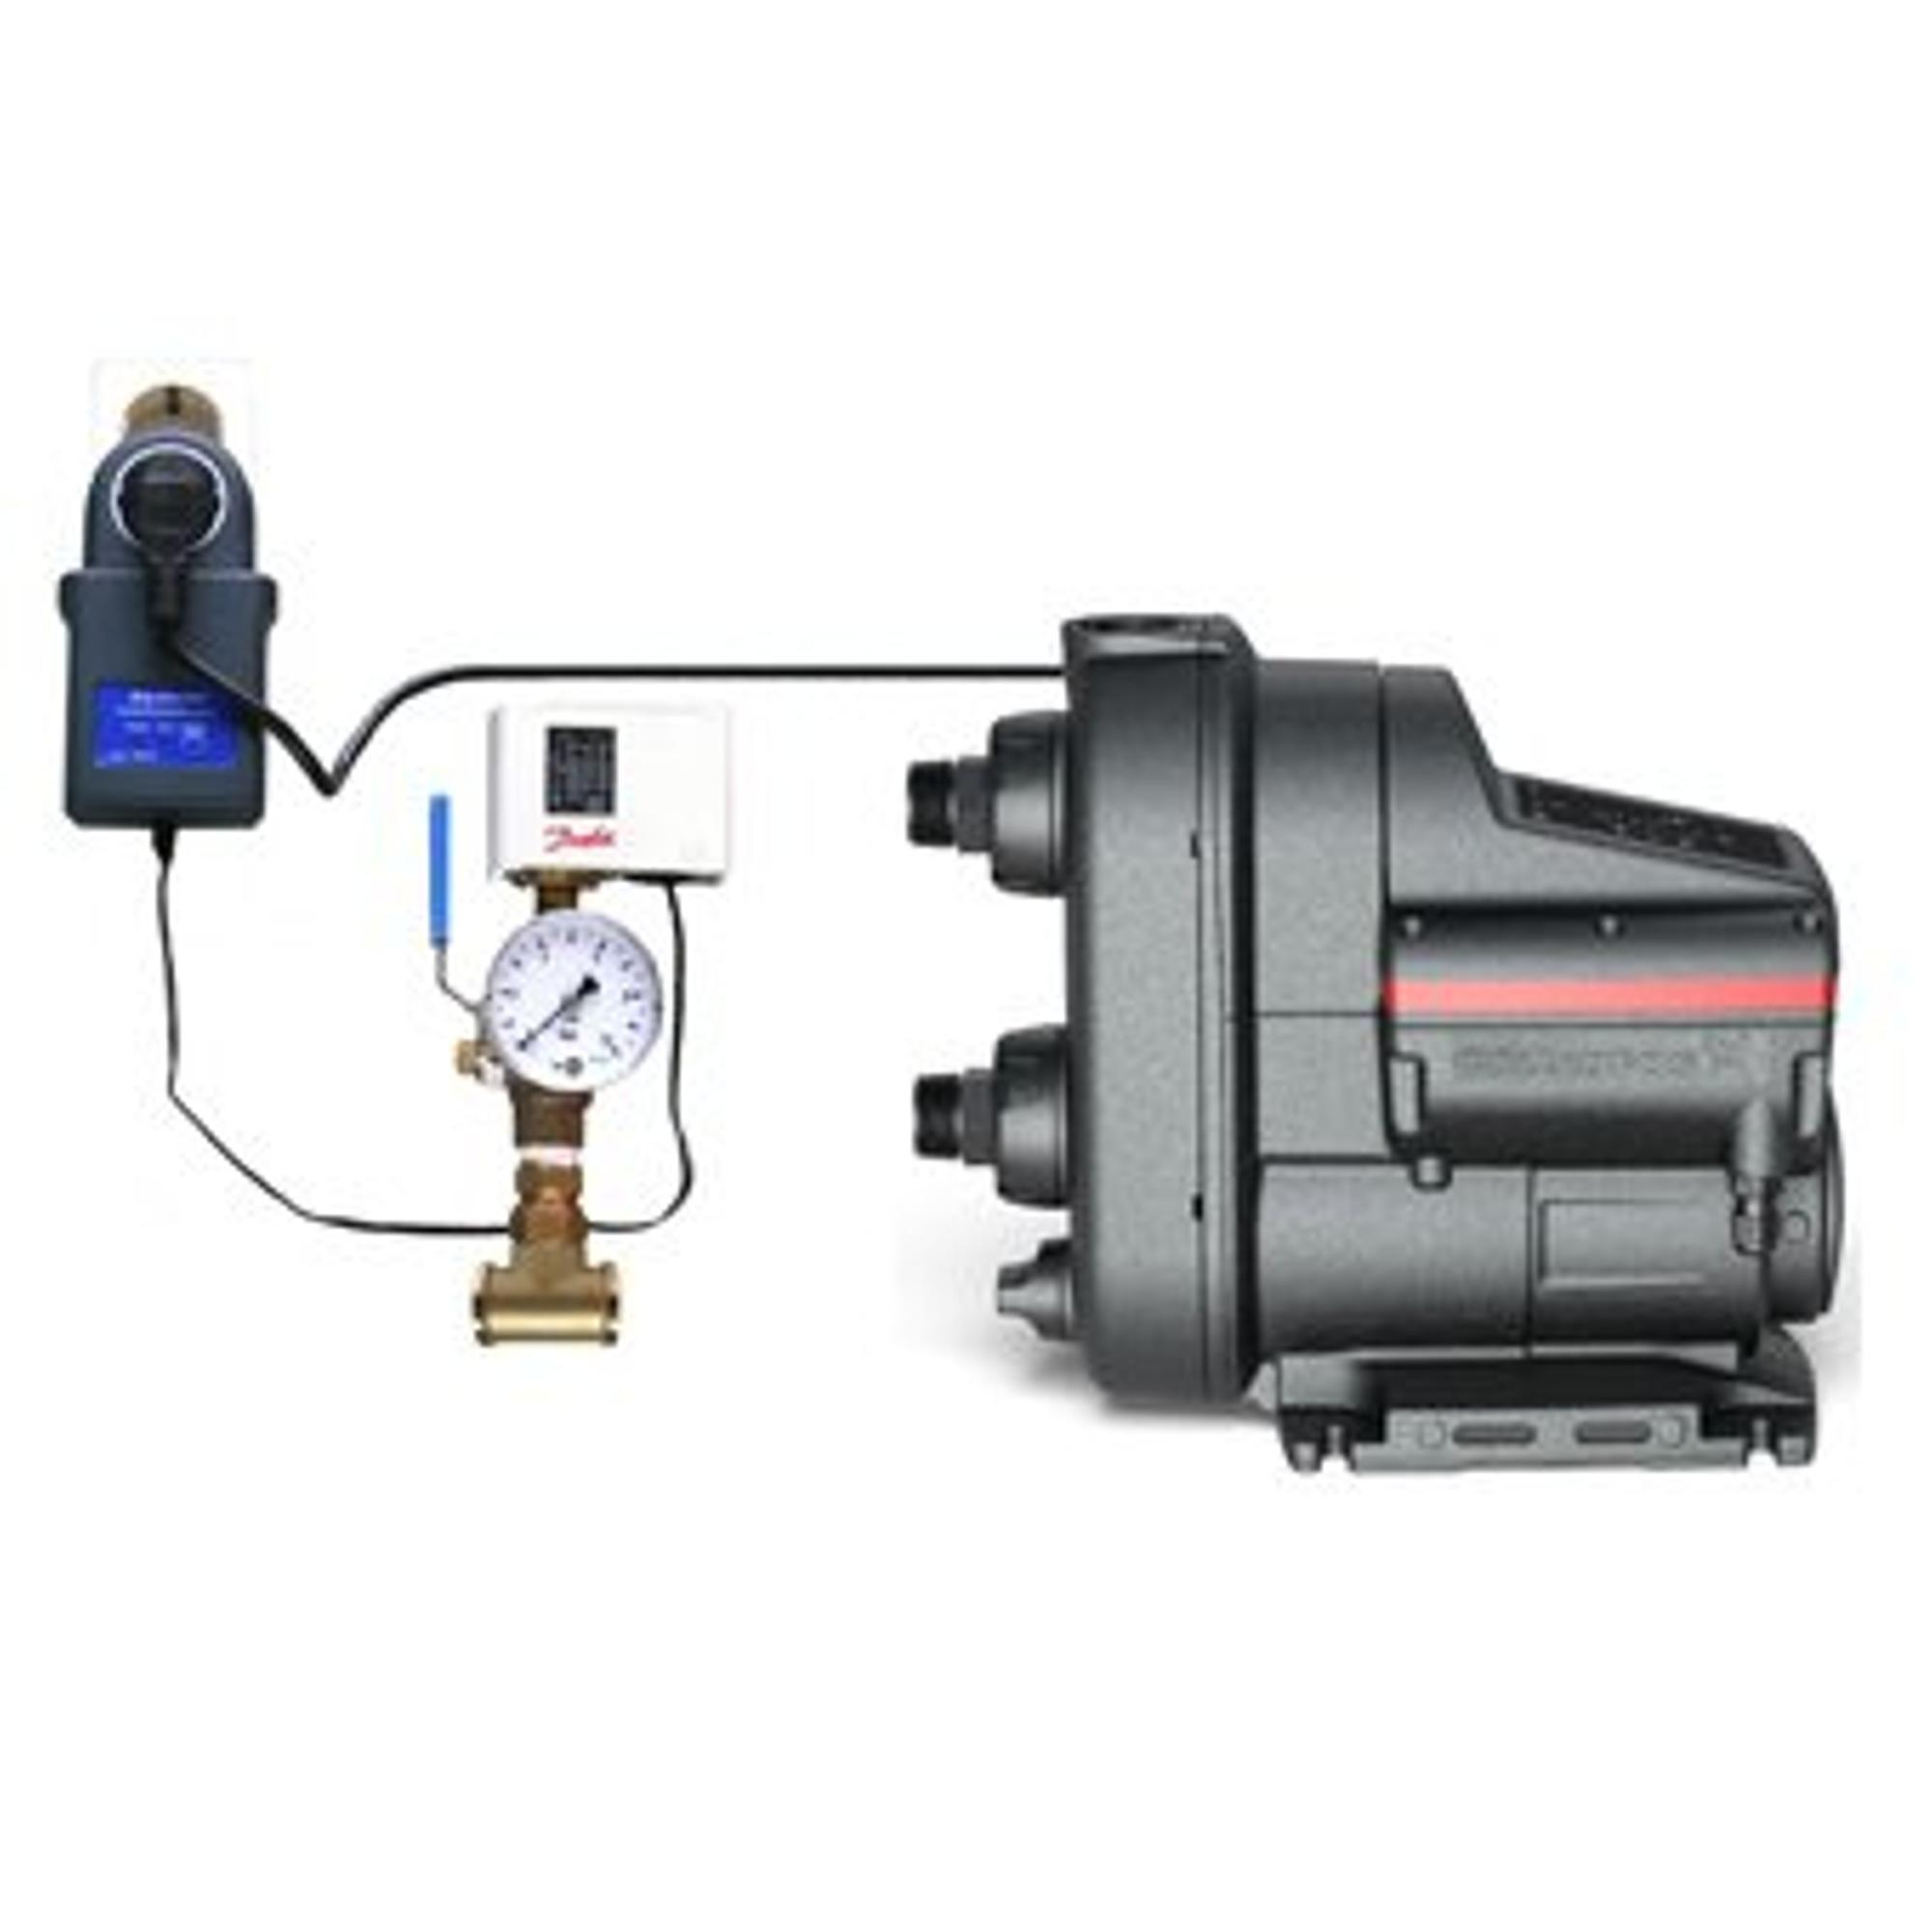 Grundfos Scala2 pompe de surpression avec 8 robinets 3 45 a, y compris dispositif  de décompression m. kiwa - 99250495 